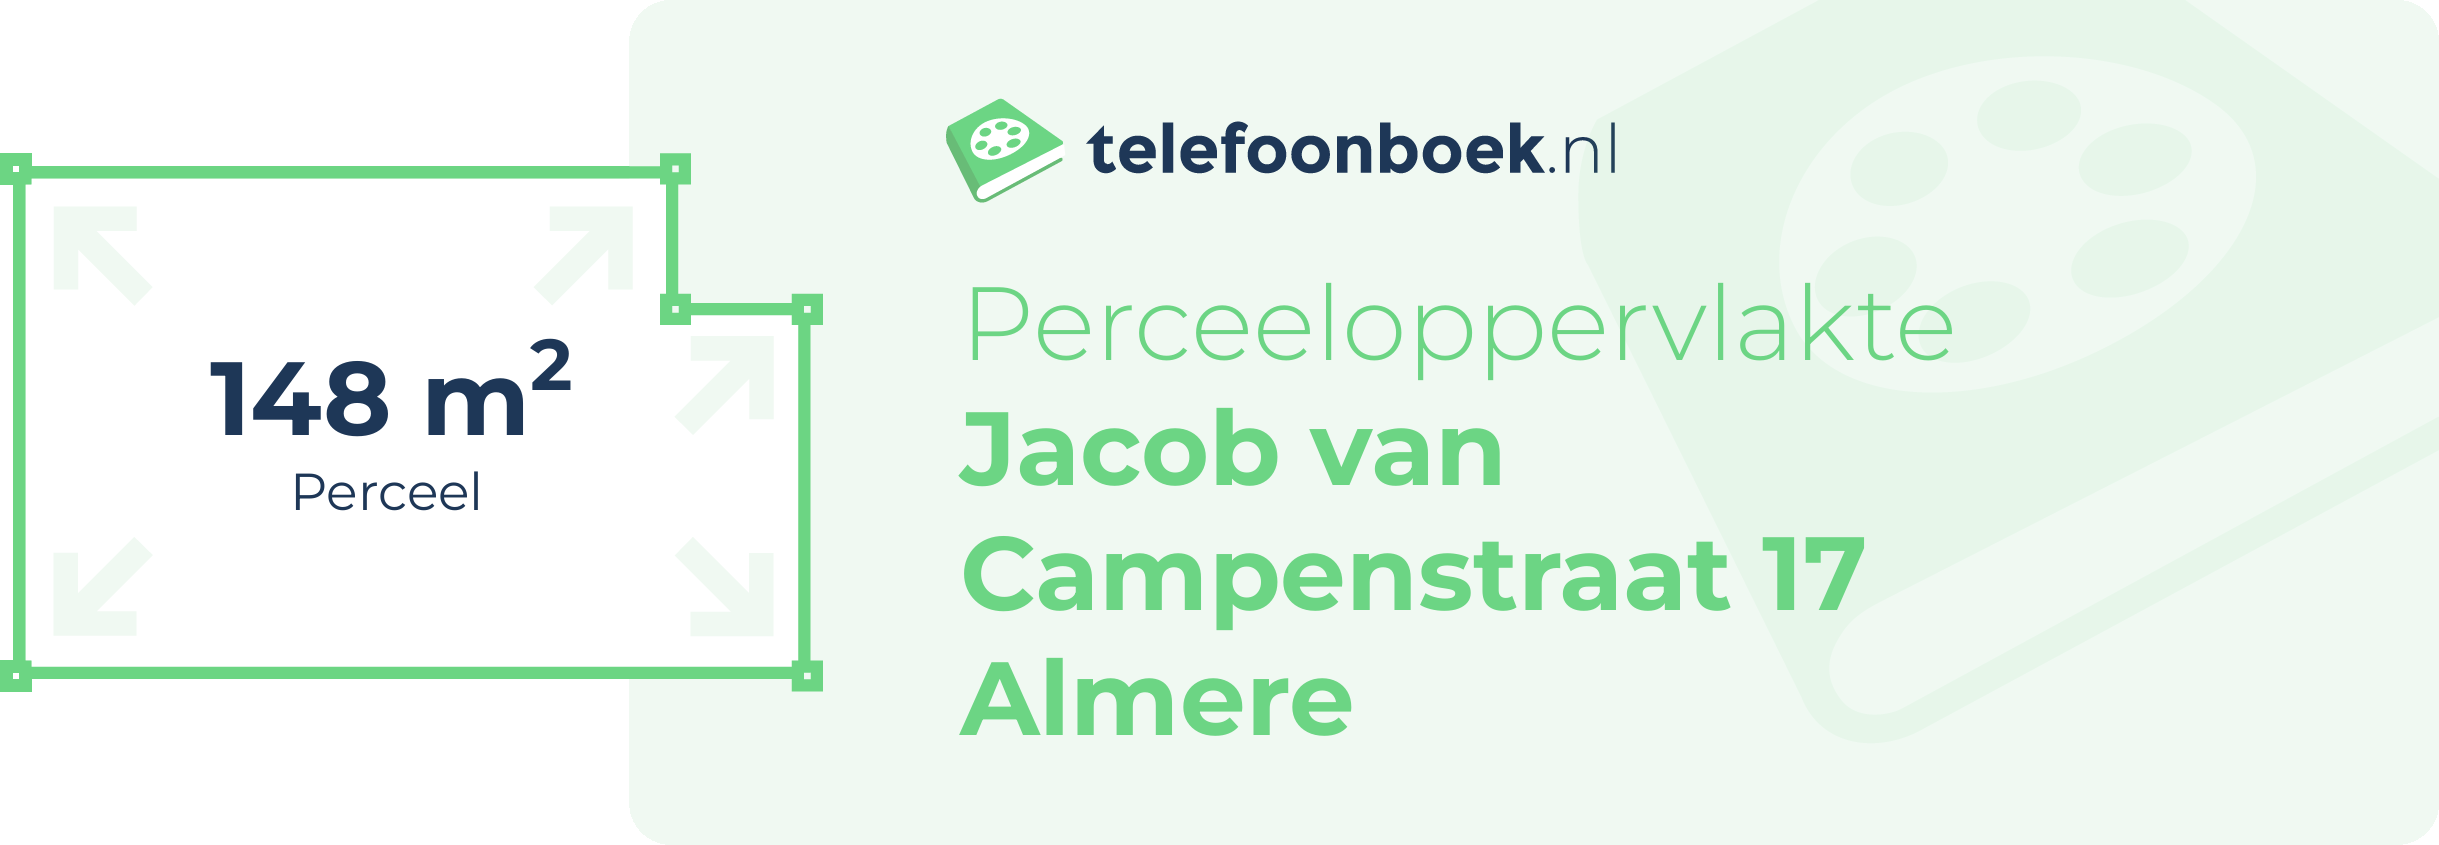 Perceeloppervlakte Jacob Van Campenstraat 17 Almere